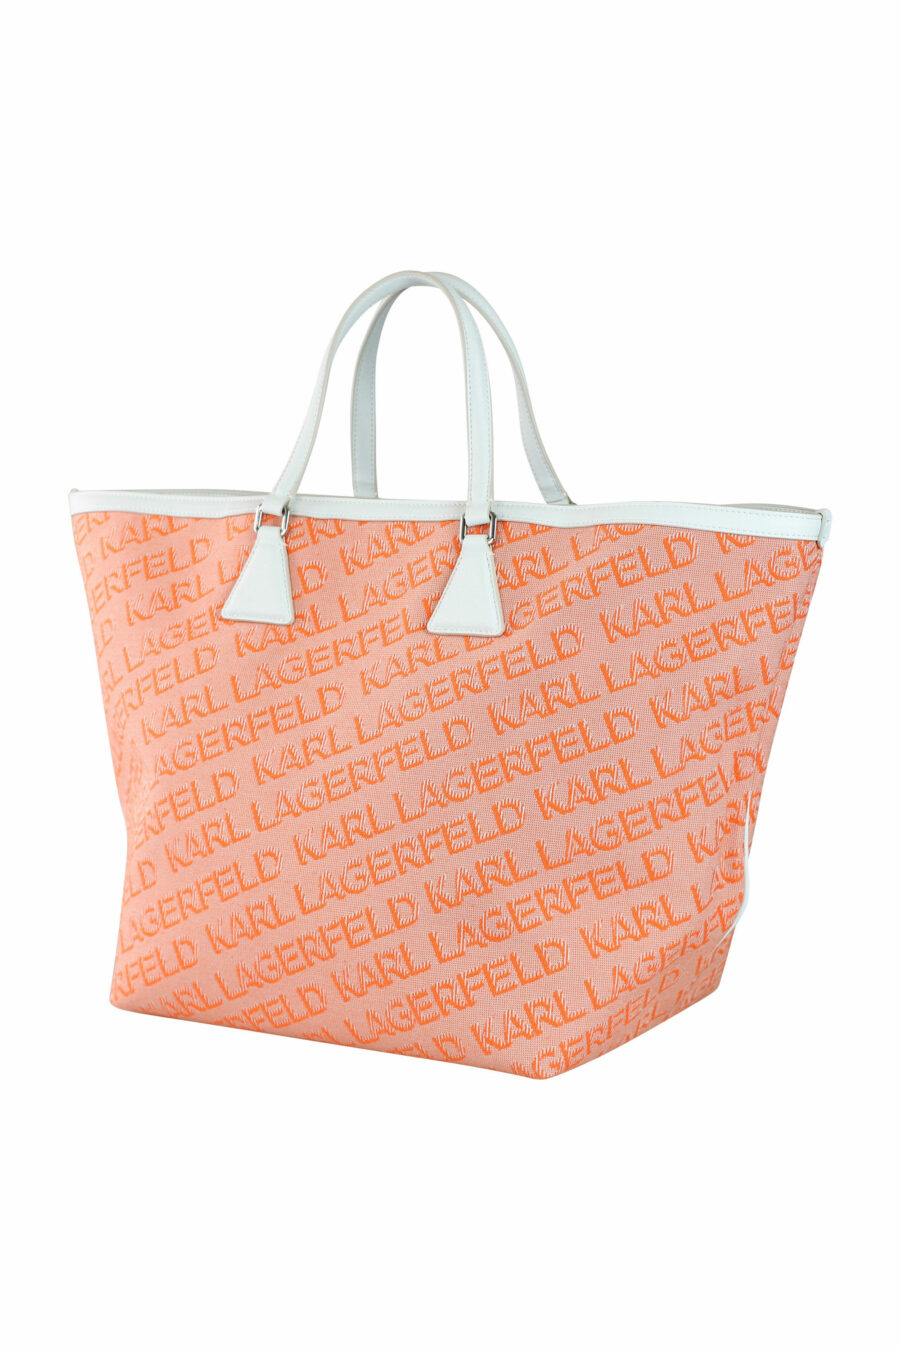 Tote bag orange "all over logo" - 8720744234210 2